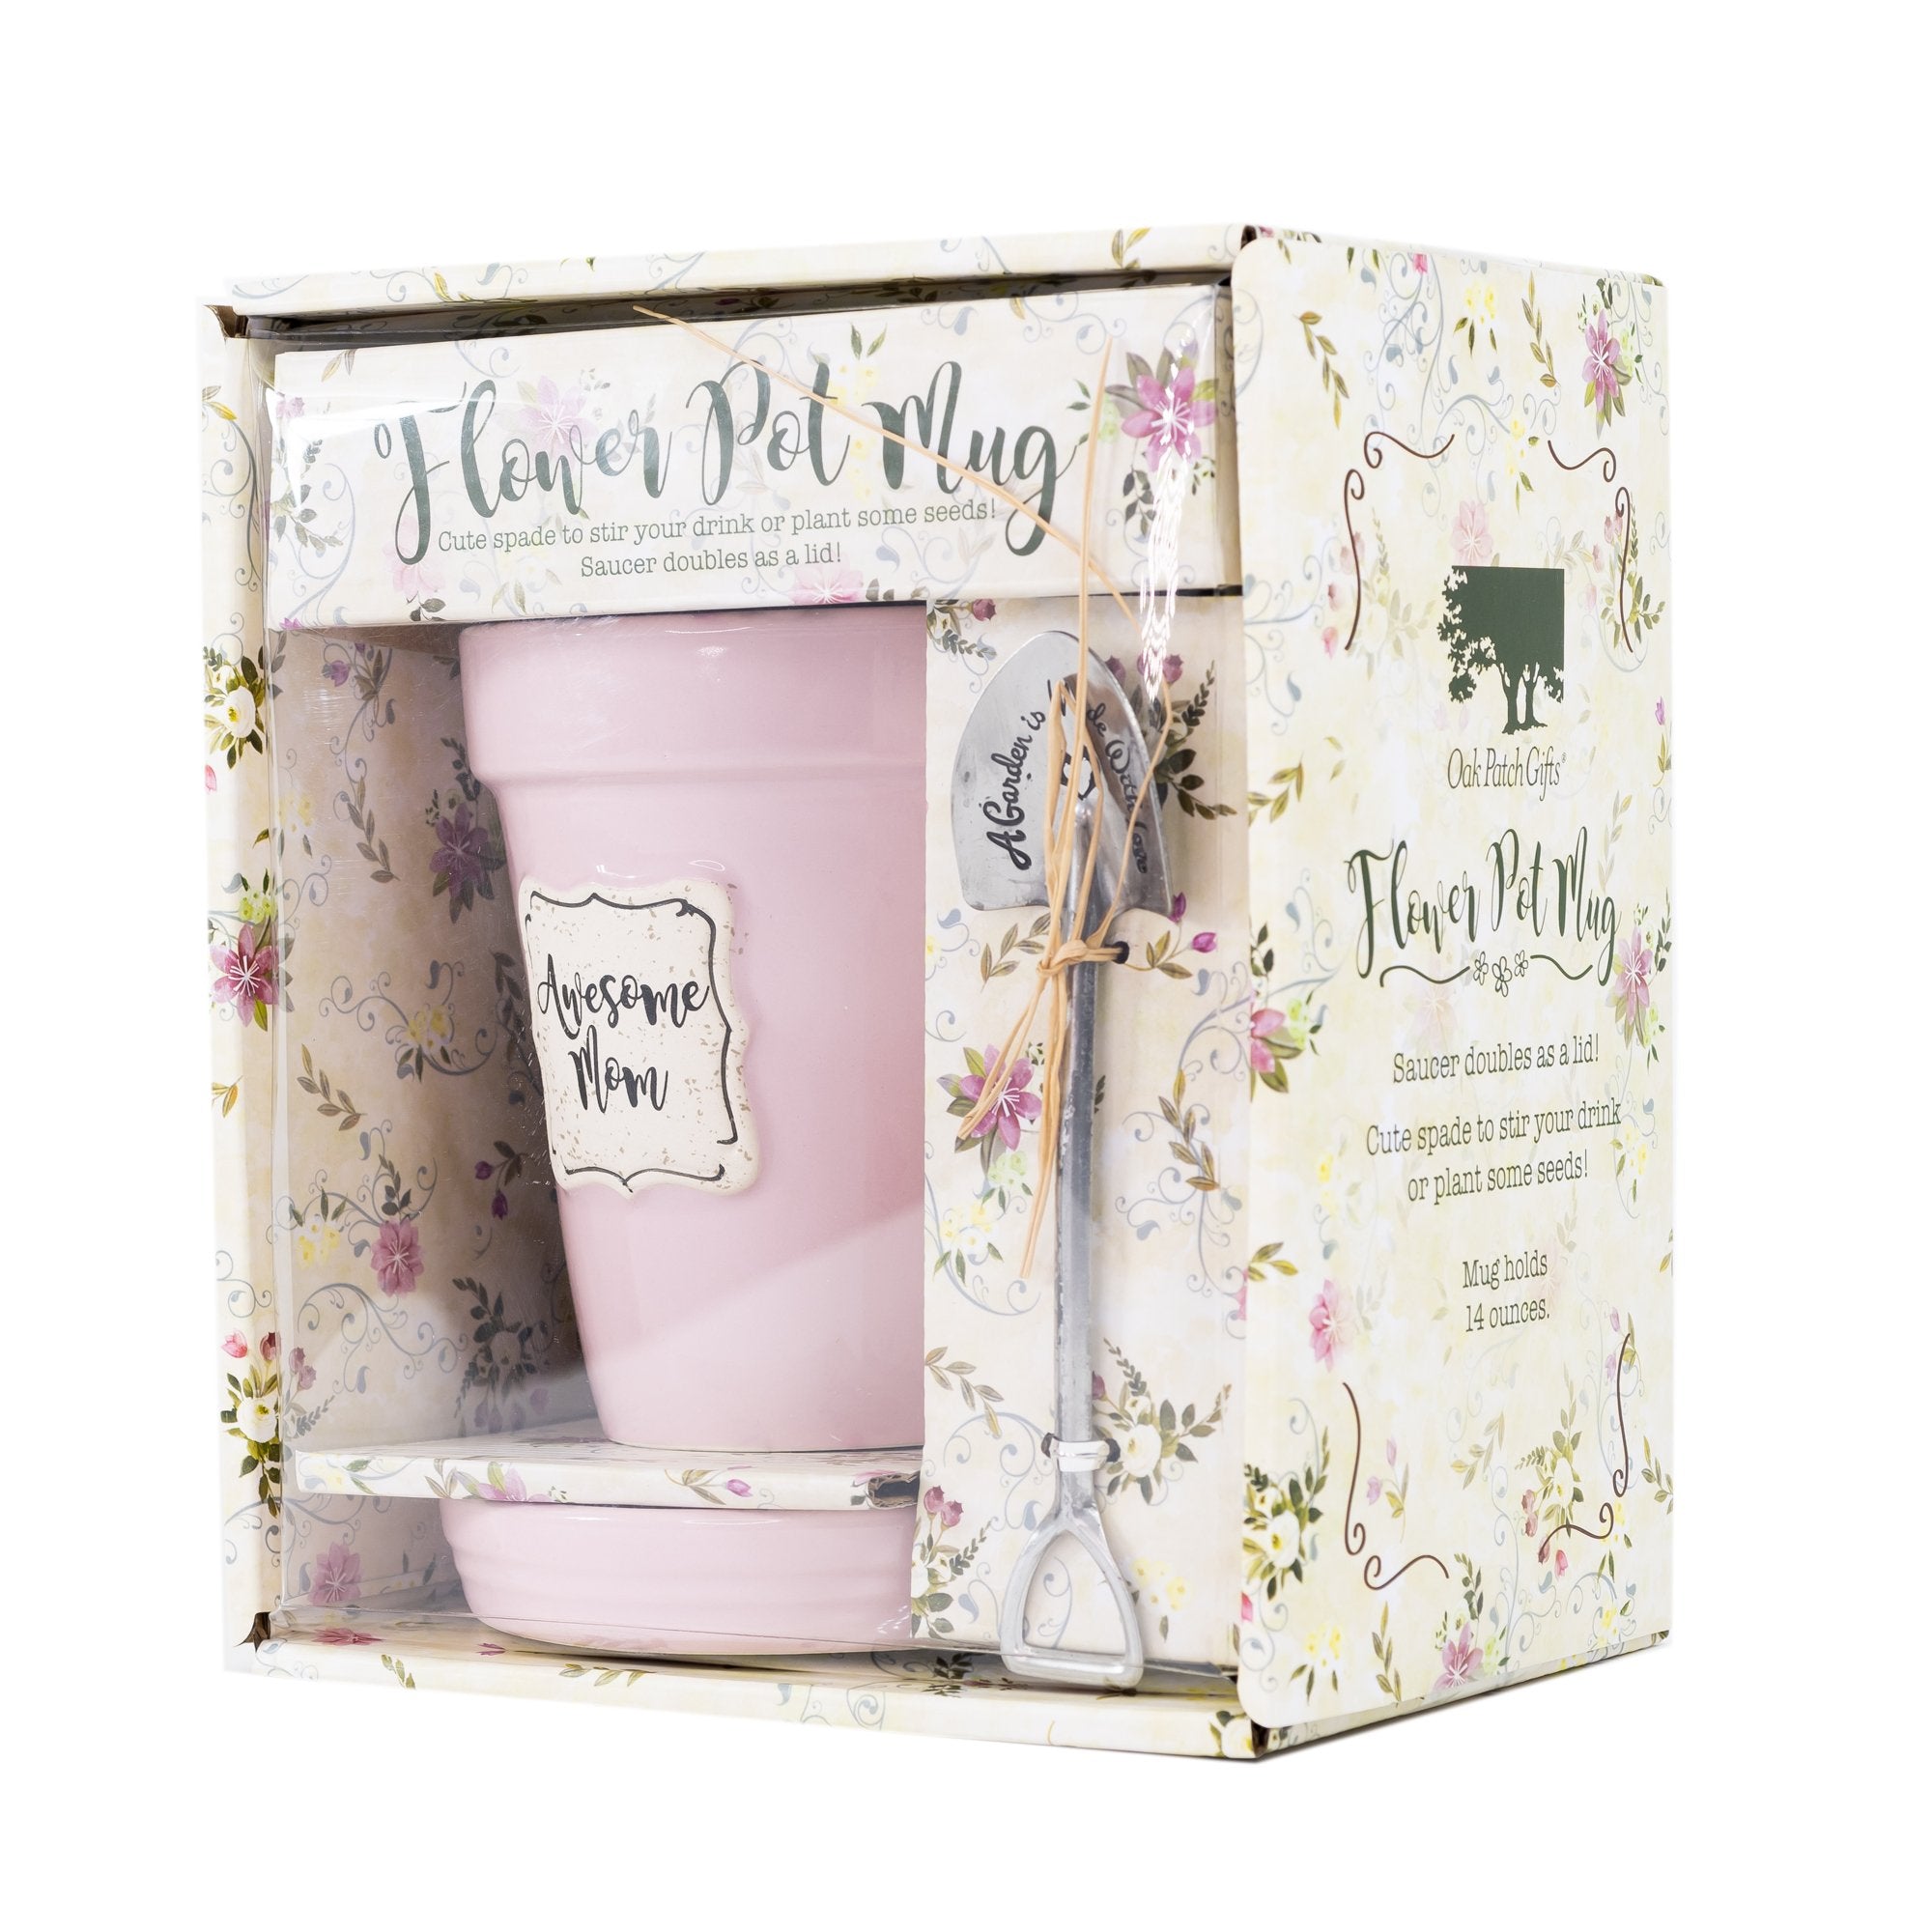 Pink Flower Pot Mug - "Awesome Mom"